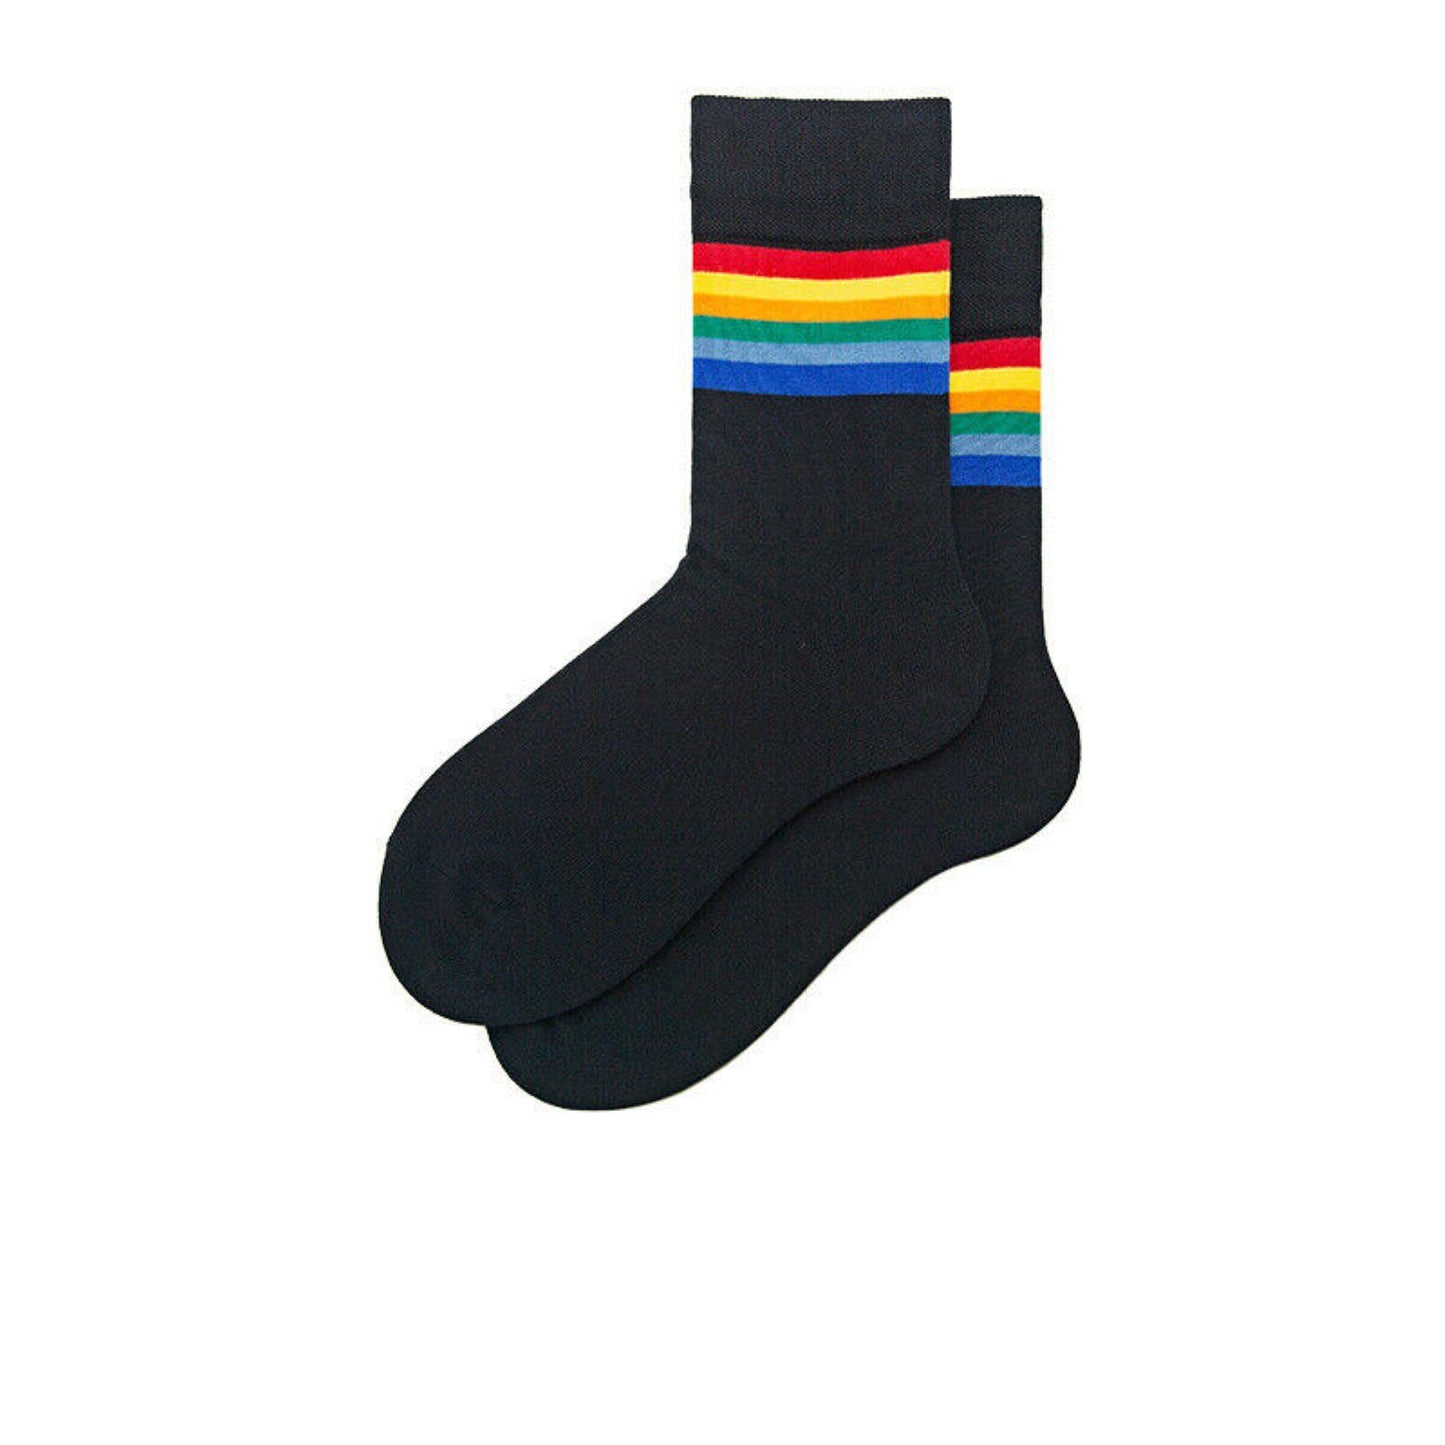 Unique Rainbow Striped Socks 2 Pairs Black White